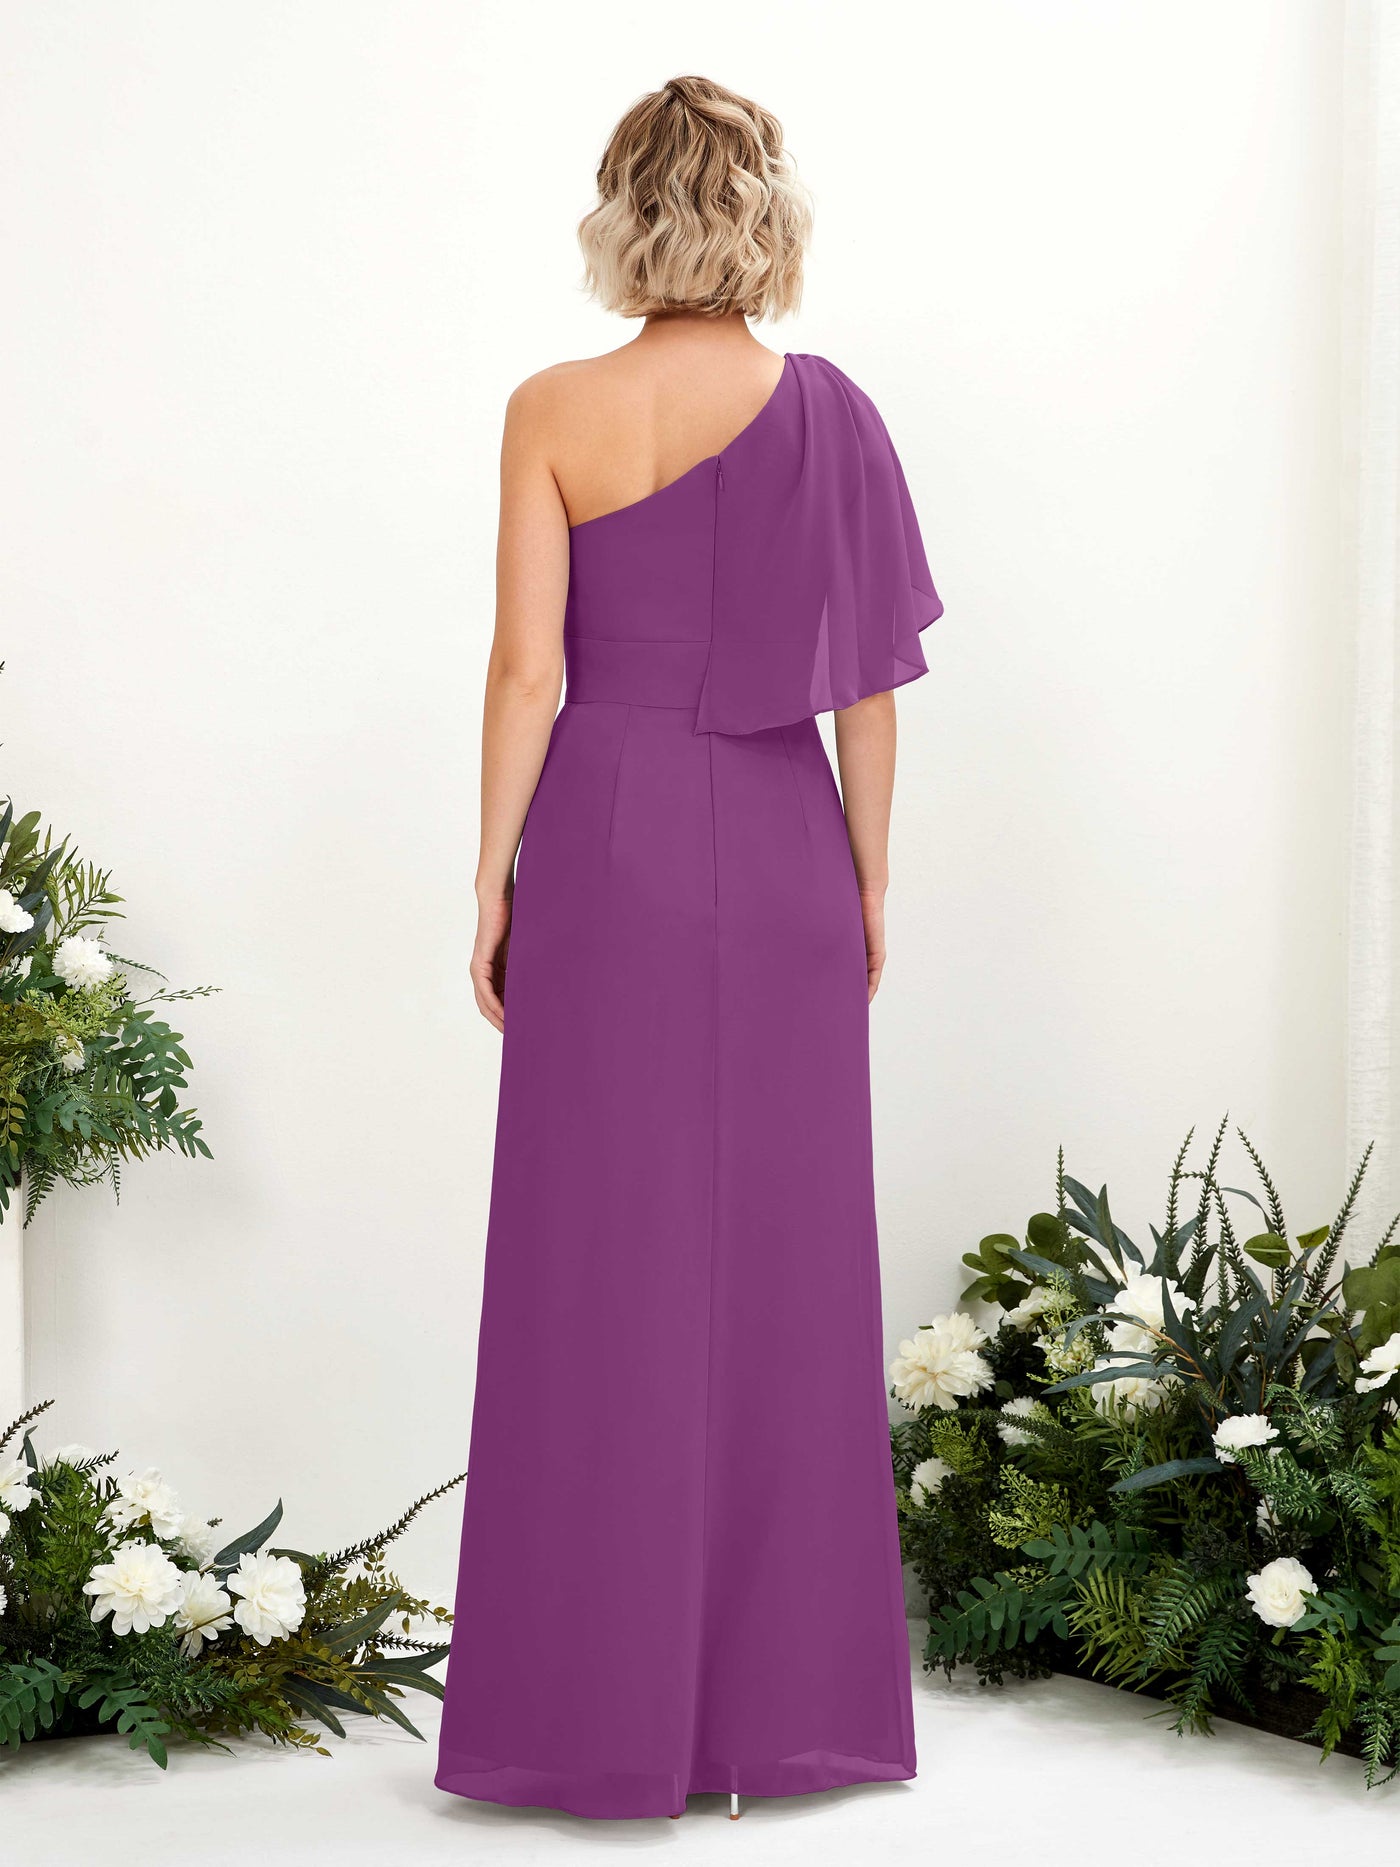 Purple Bridesmaid Dresses Bridesmaid Dress Ball Gown Chiffon Full Length Short Sleeves Wedding Party Dress (81223736)#color_purple